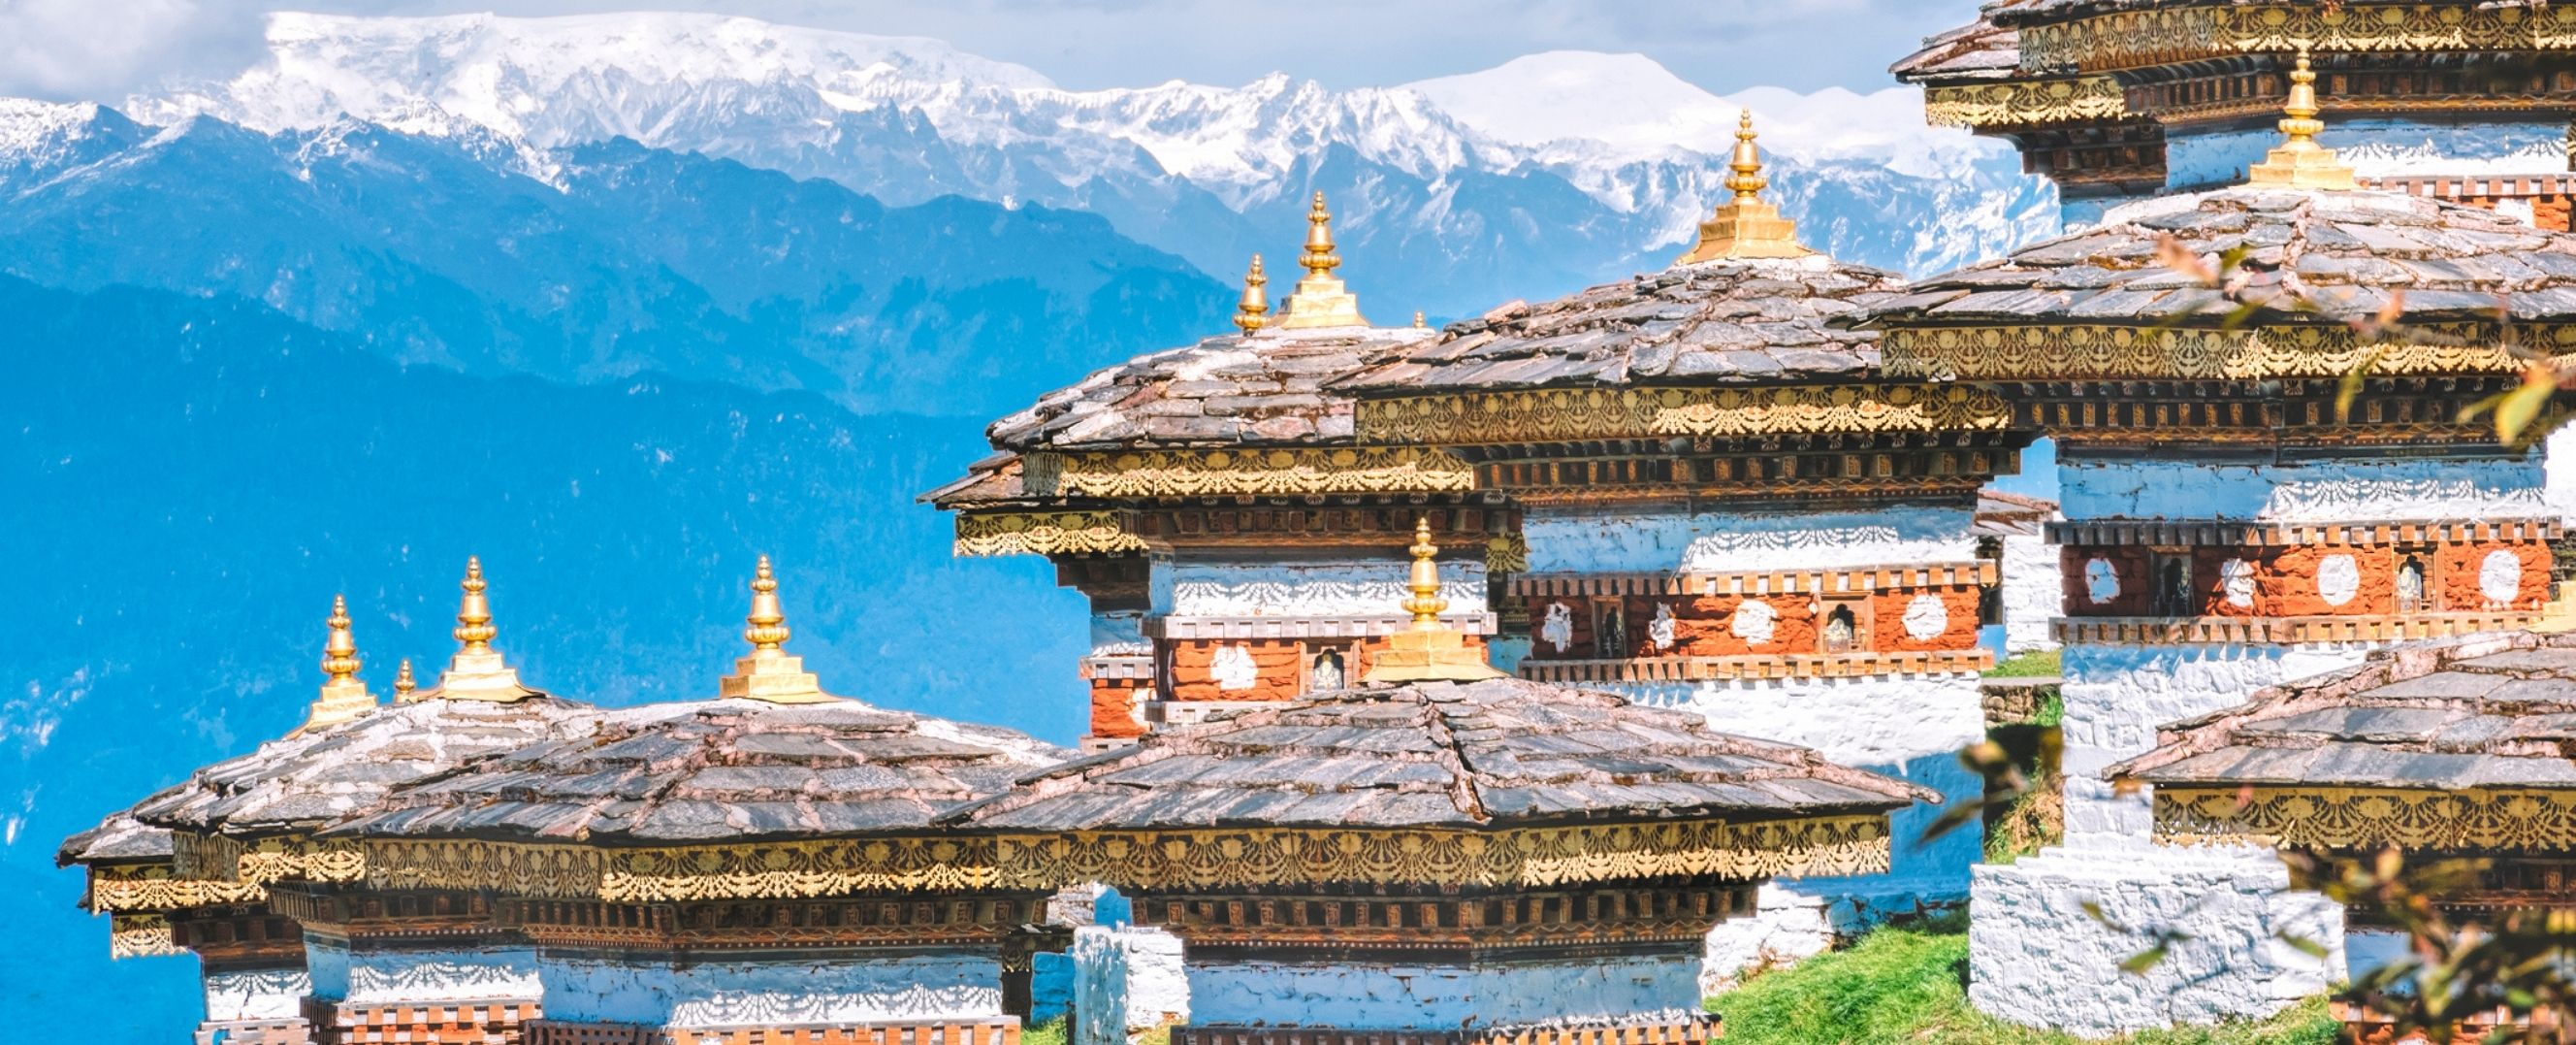 Bhutan population 2021